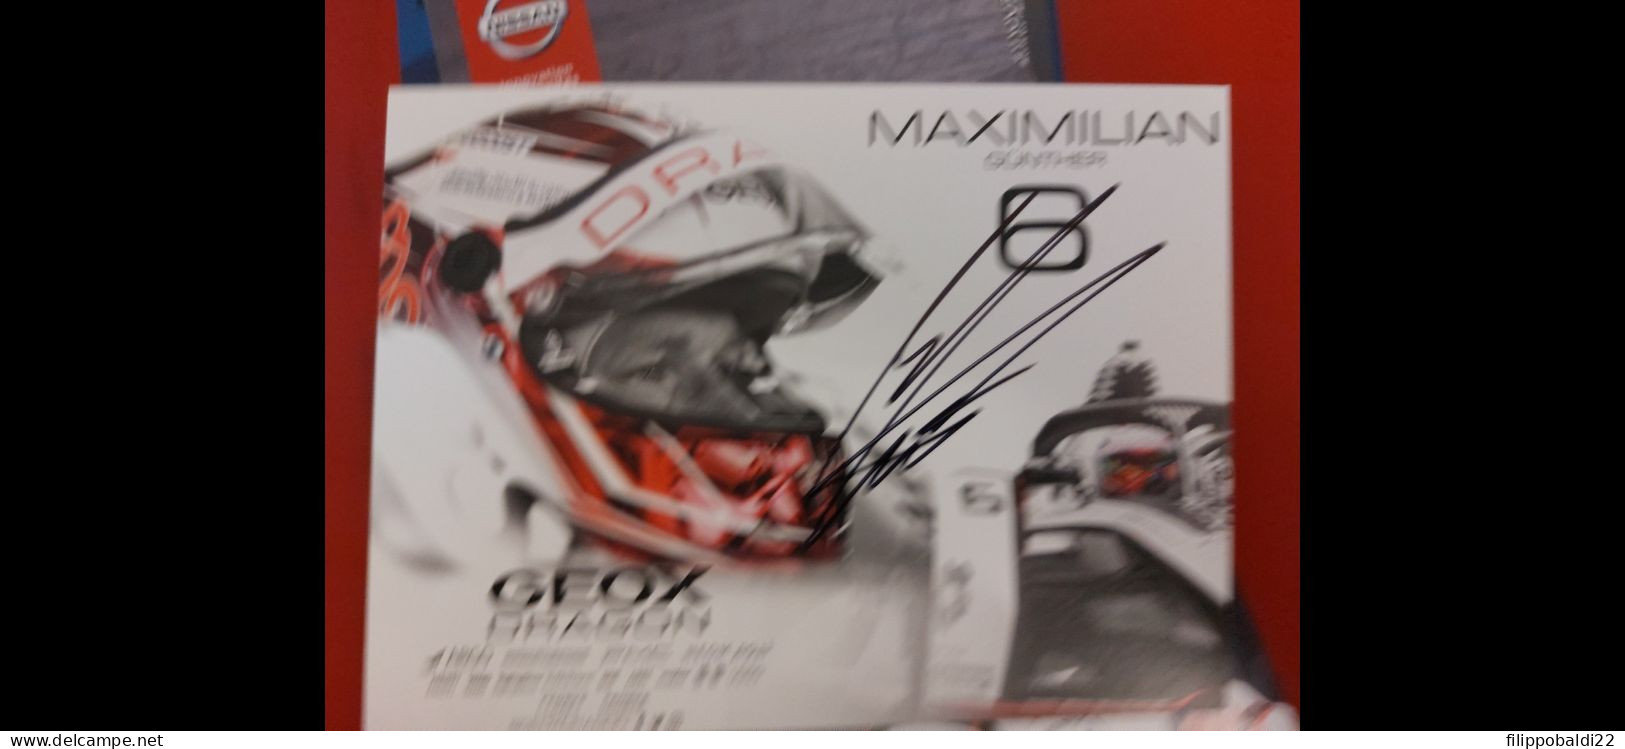 Lopez E Ghunter Autografo Autograph Signed - Automobile - F1